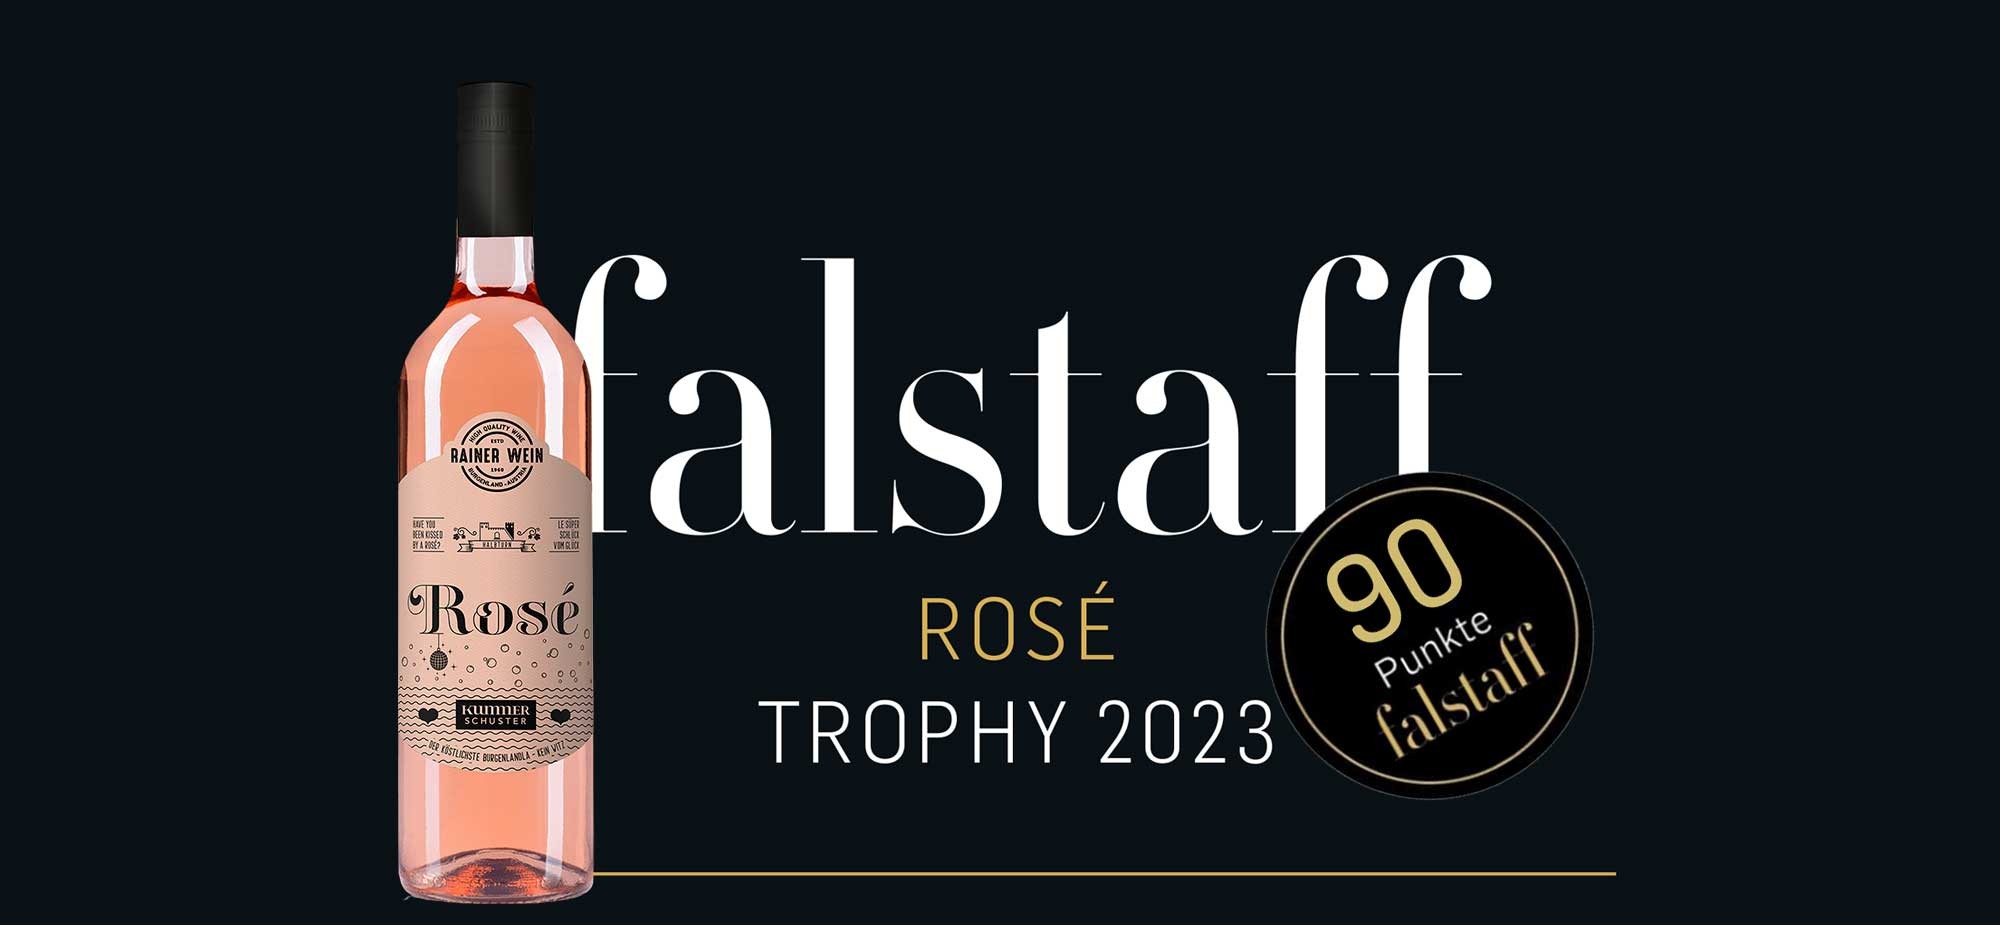 Rose-Falstaff